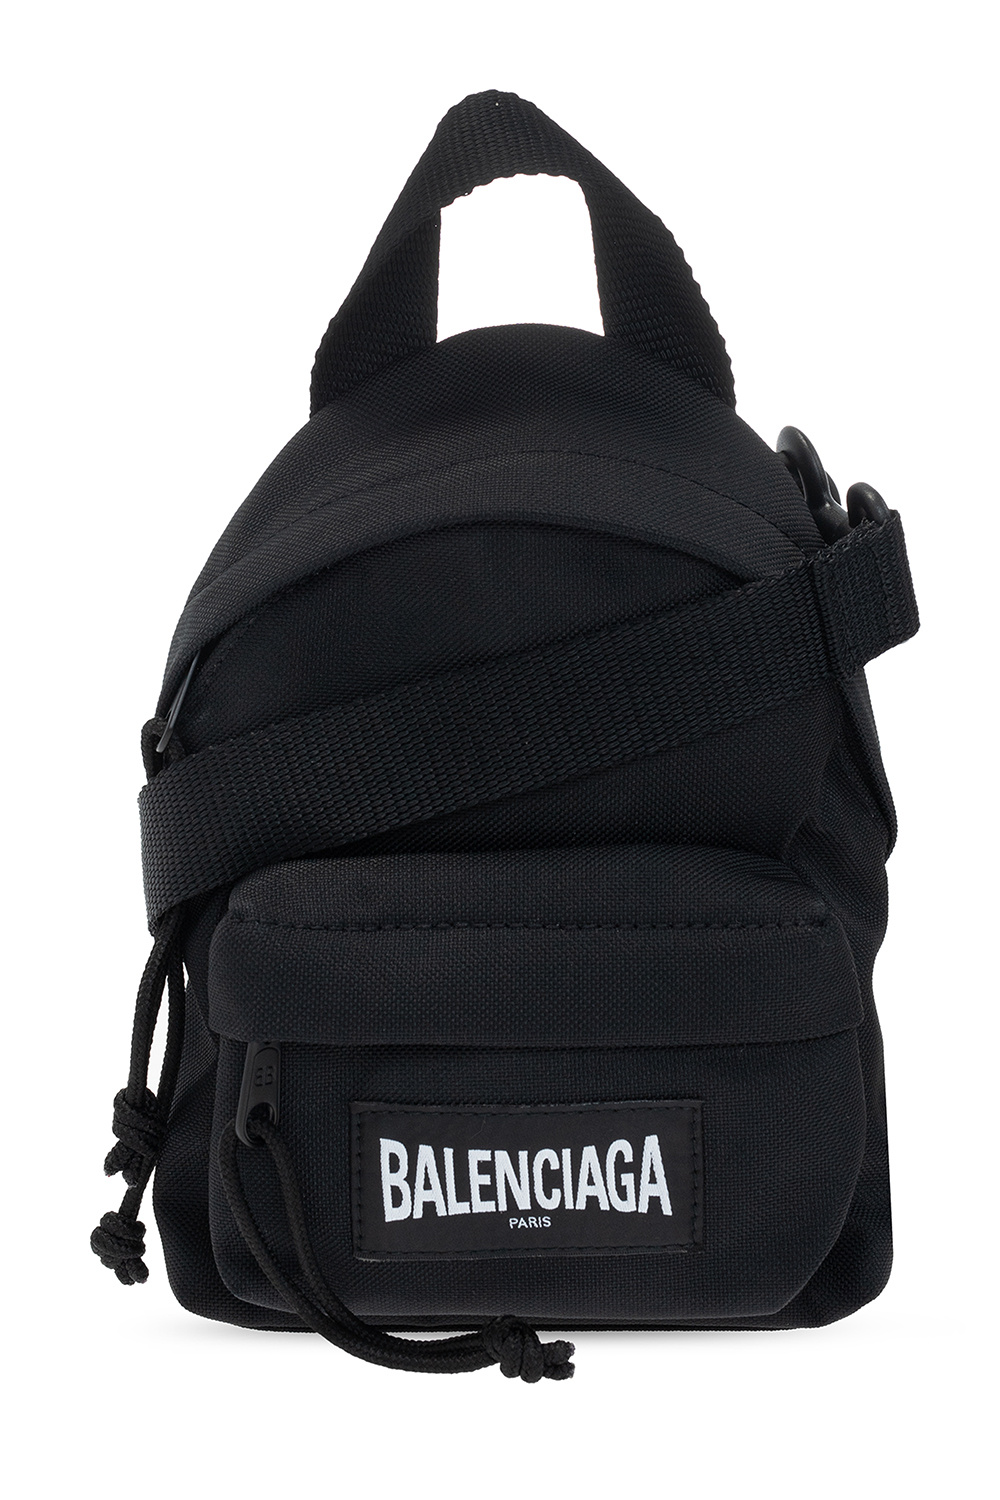 Balenciaga Saint Laurent small Loulou quilted shoulder bag Black